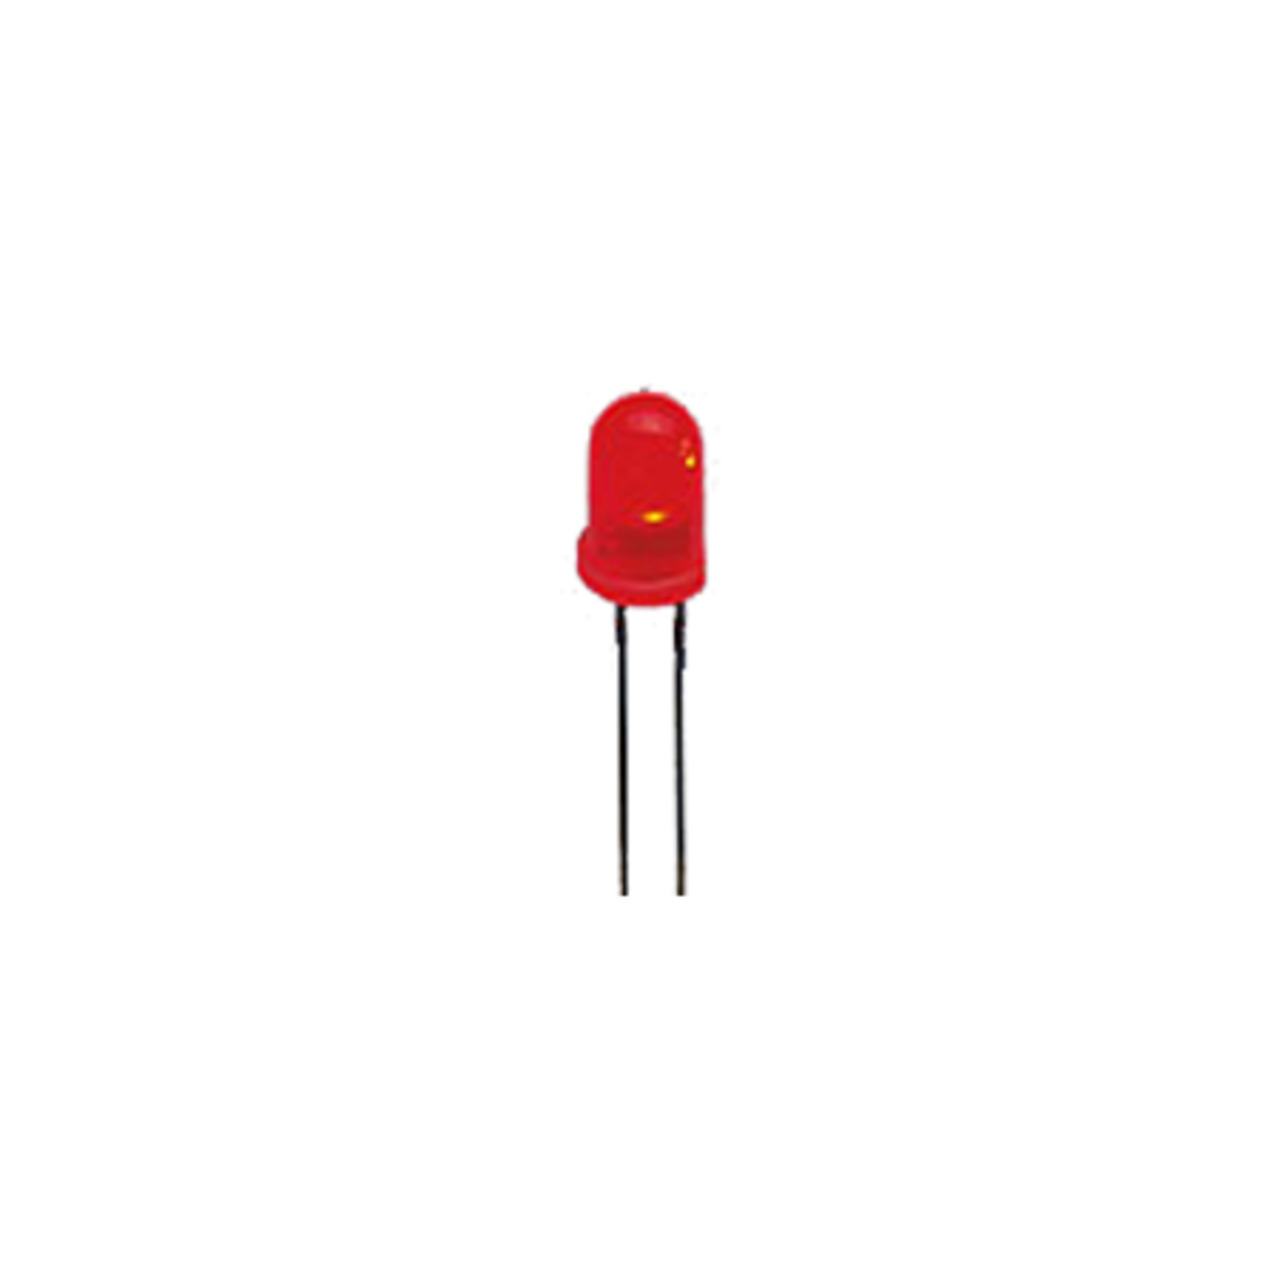 LED 5 mm- Rot unter Komponenten